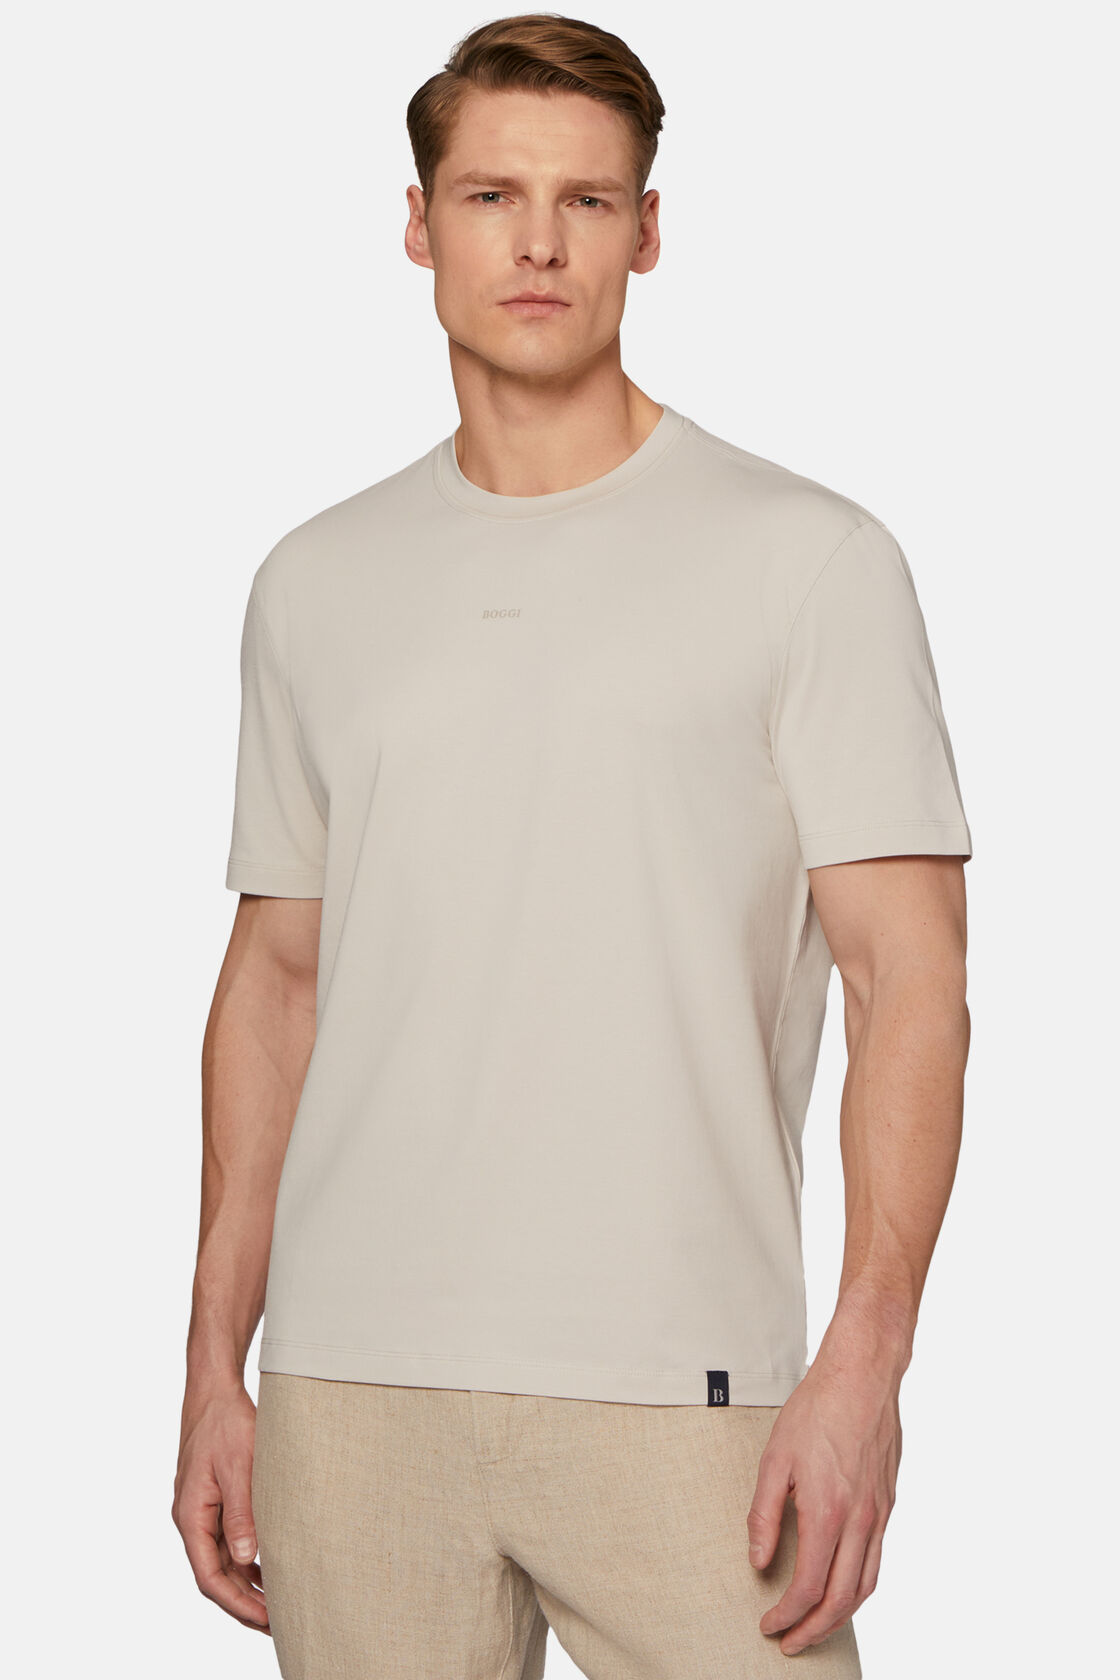 T-shirt in stretch supima katoen, Sand, hi-res